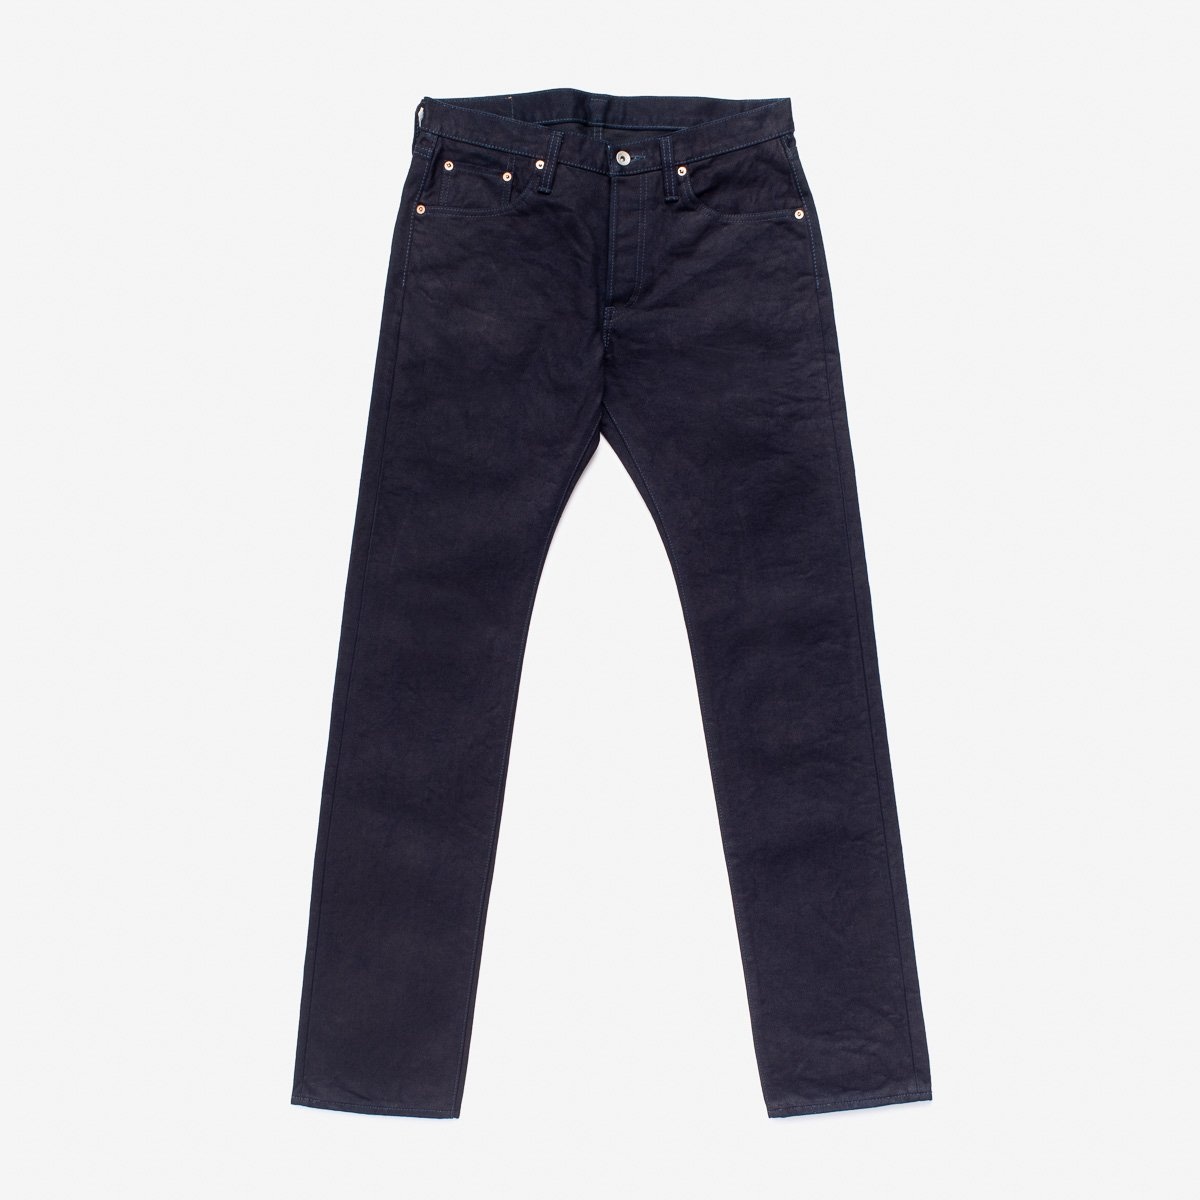 IH-777S-142ib 14oz Selvedge Denim Slim Tapered Cut Jeans - Indigo/Black - 1